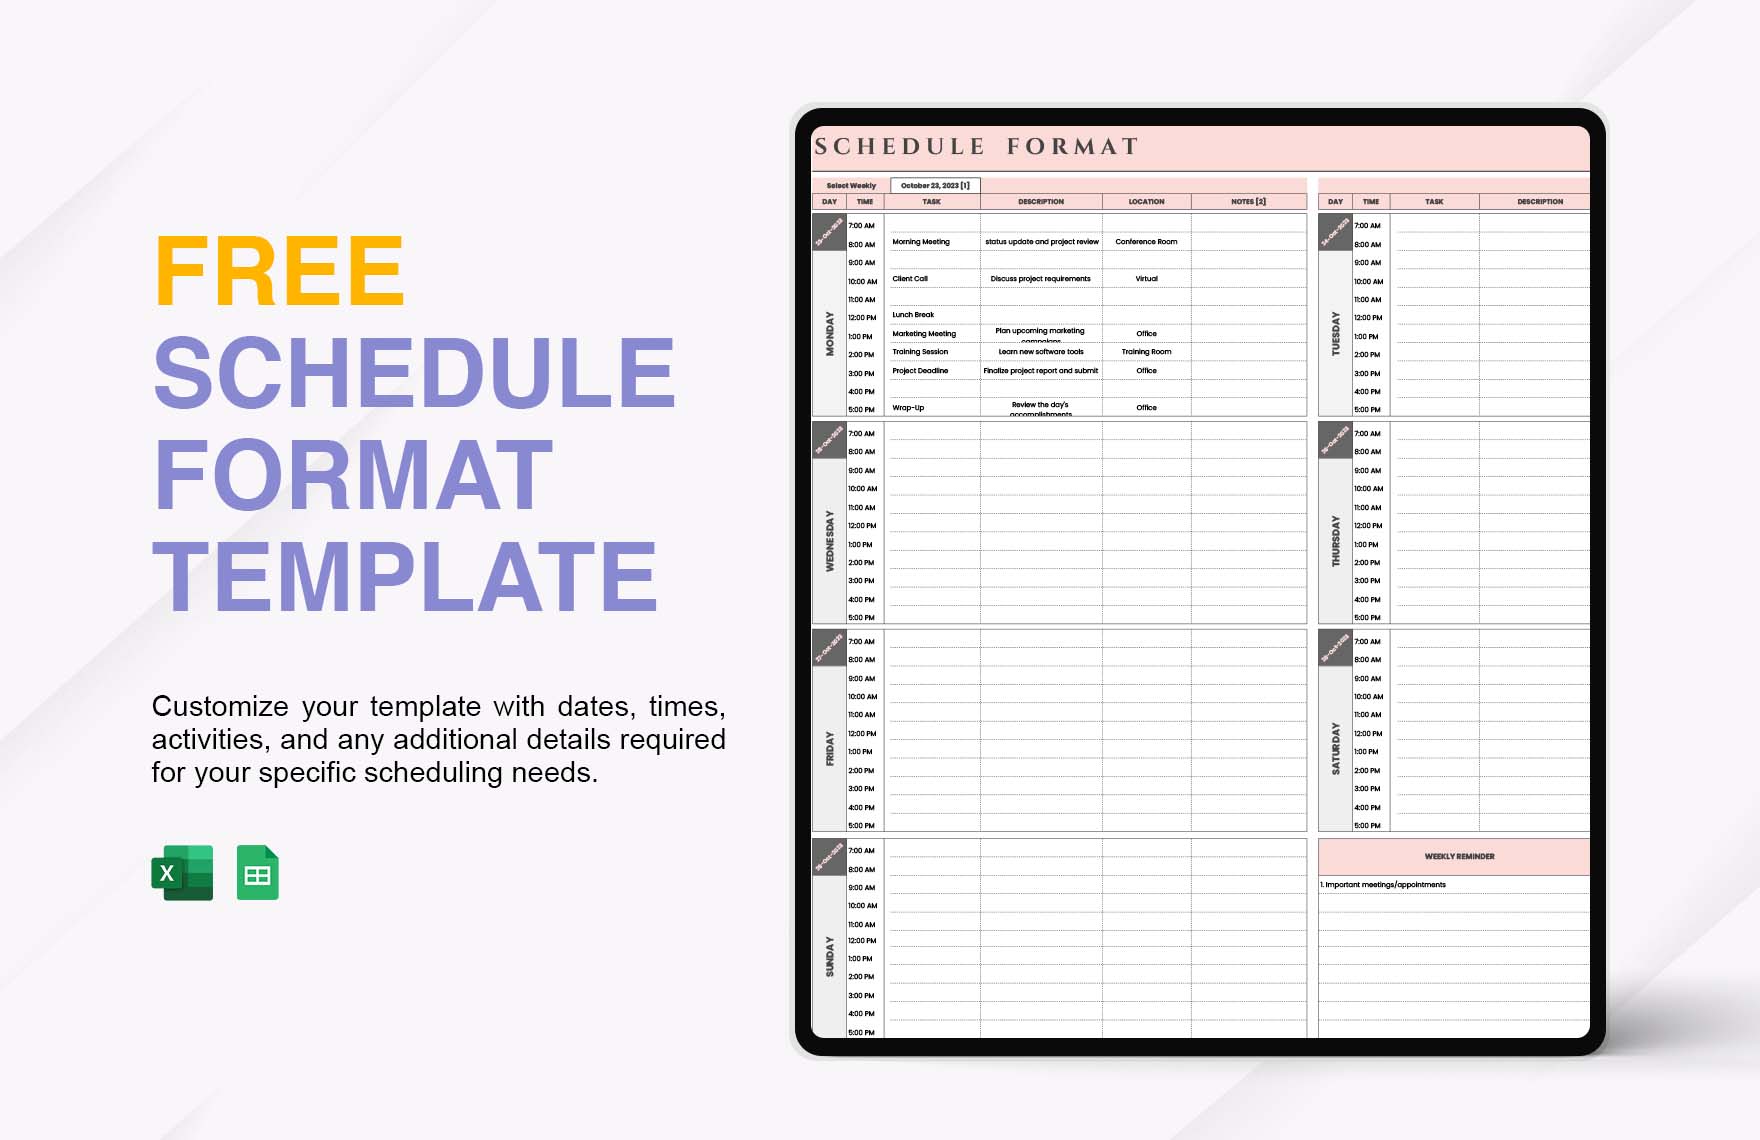 Schedule Format Template